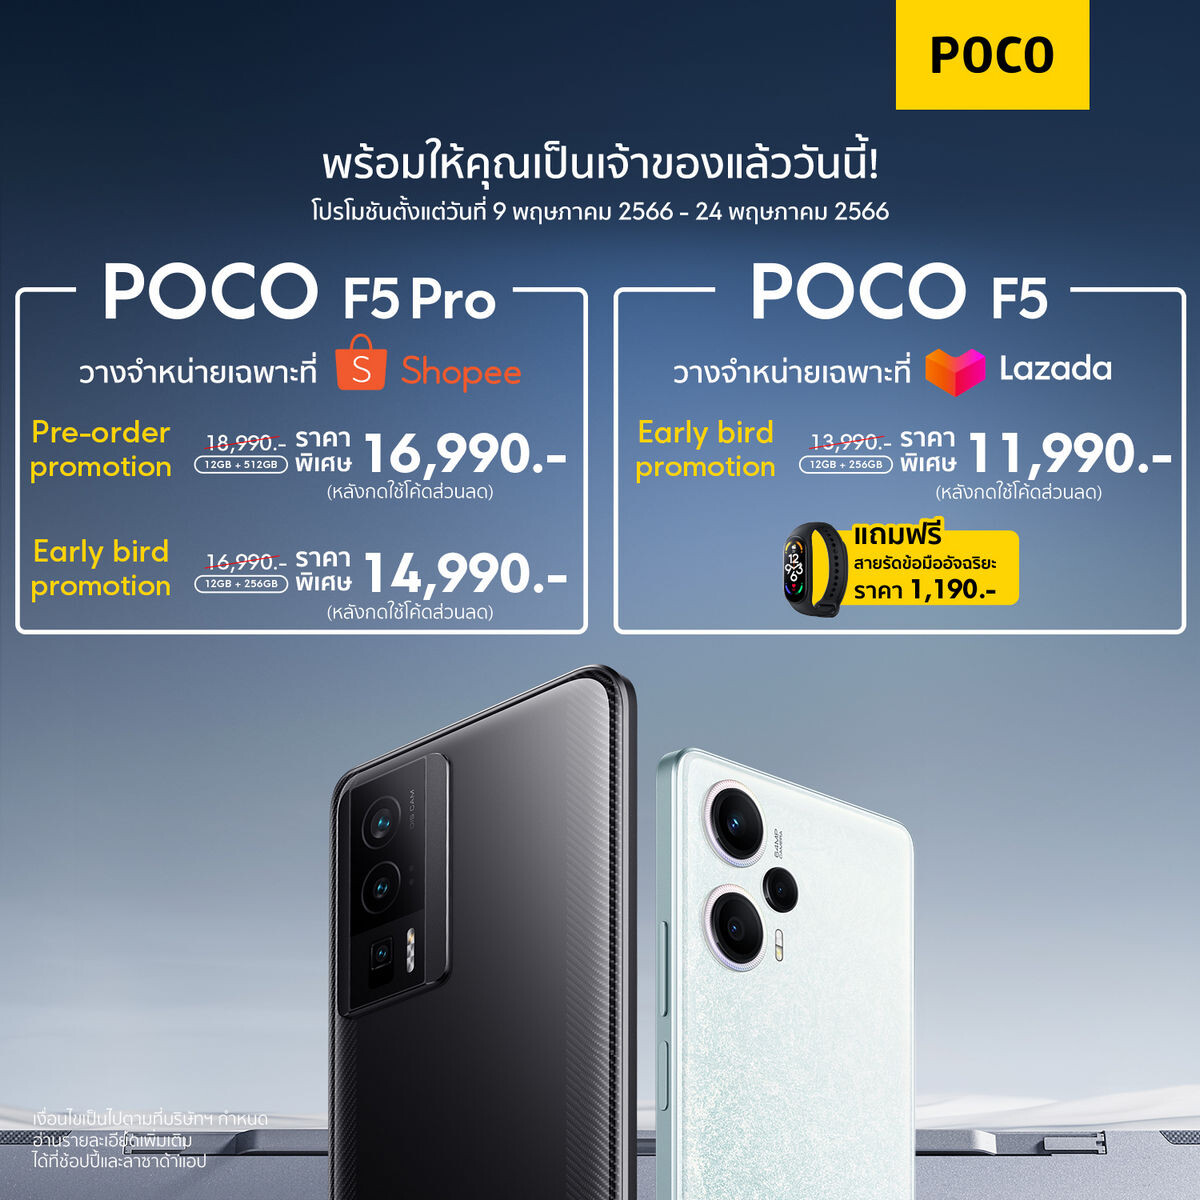 POCO เปิดตัวสมาร์ทโฟนเรือธงรุ่นใหม่ล่าสุด POCO F5 Pro และ POCO F5 พร้อมมอบราคาพิเศษสำหรับลูกค้าที่ซื้อระหว่างวันที่ 9 - 24 พ.ค. นี้!